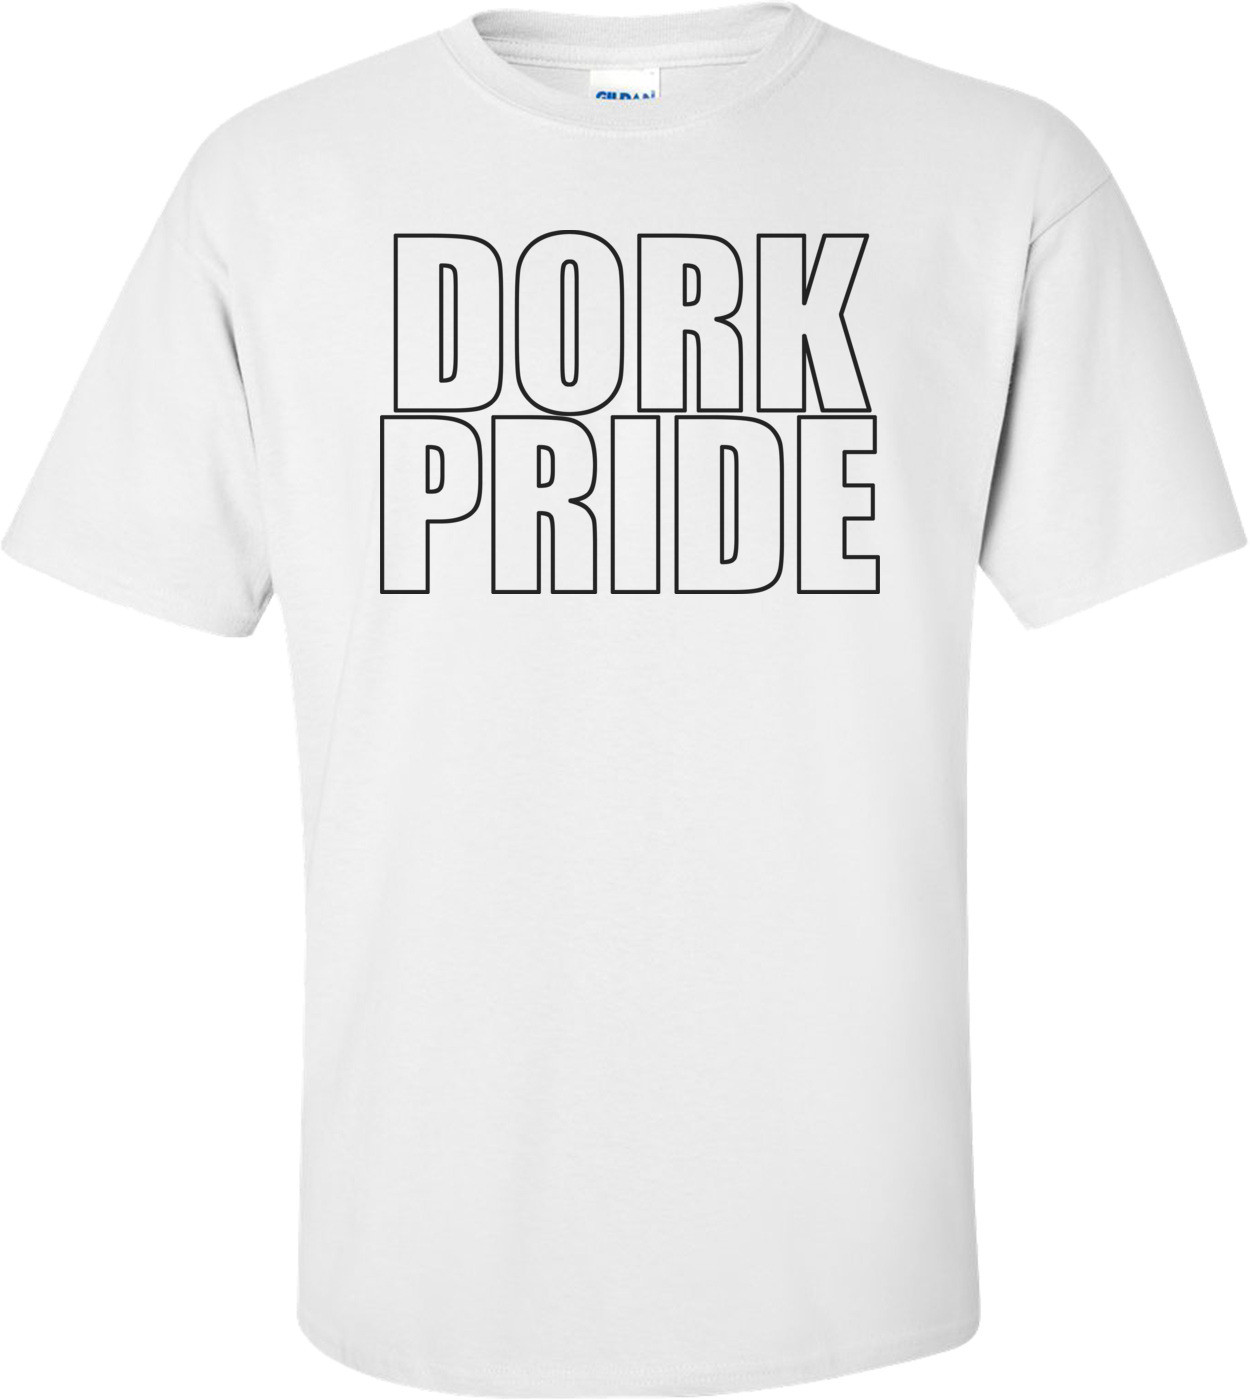 Dork Pride Shirt